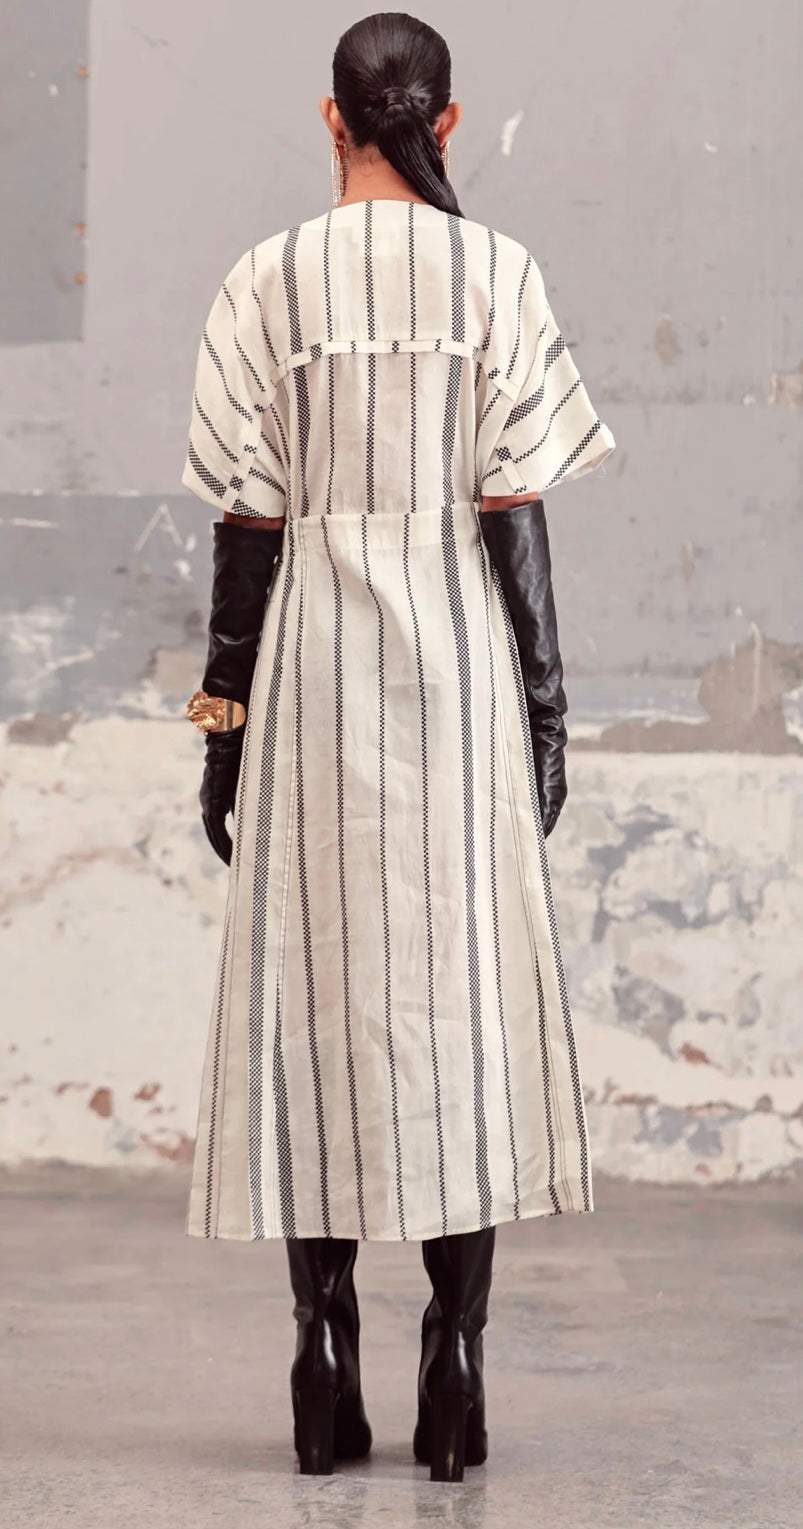 Ivory & Black Pixel Stripe Dress